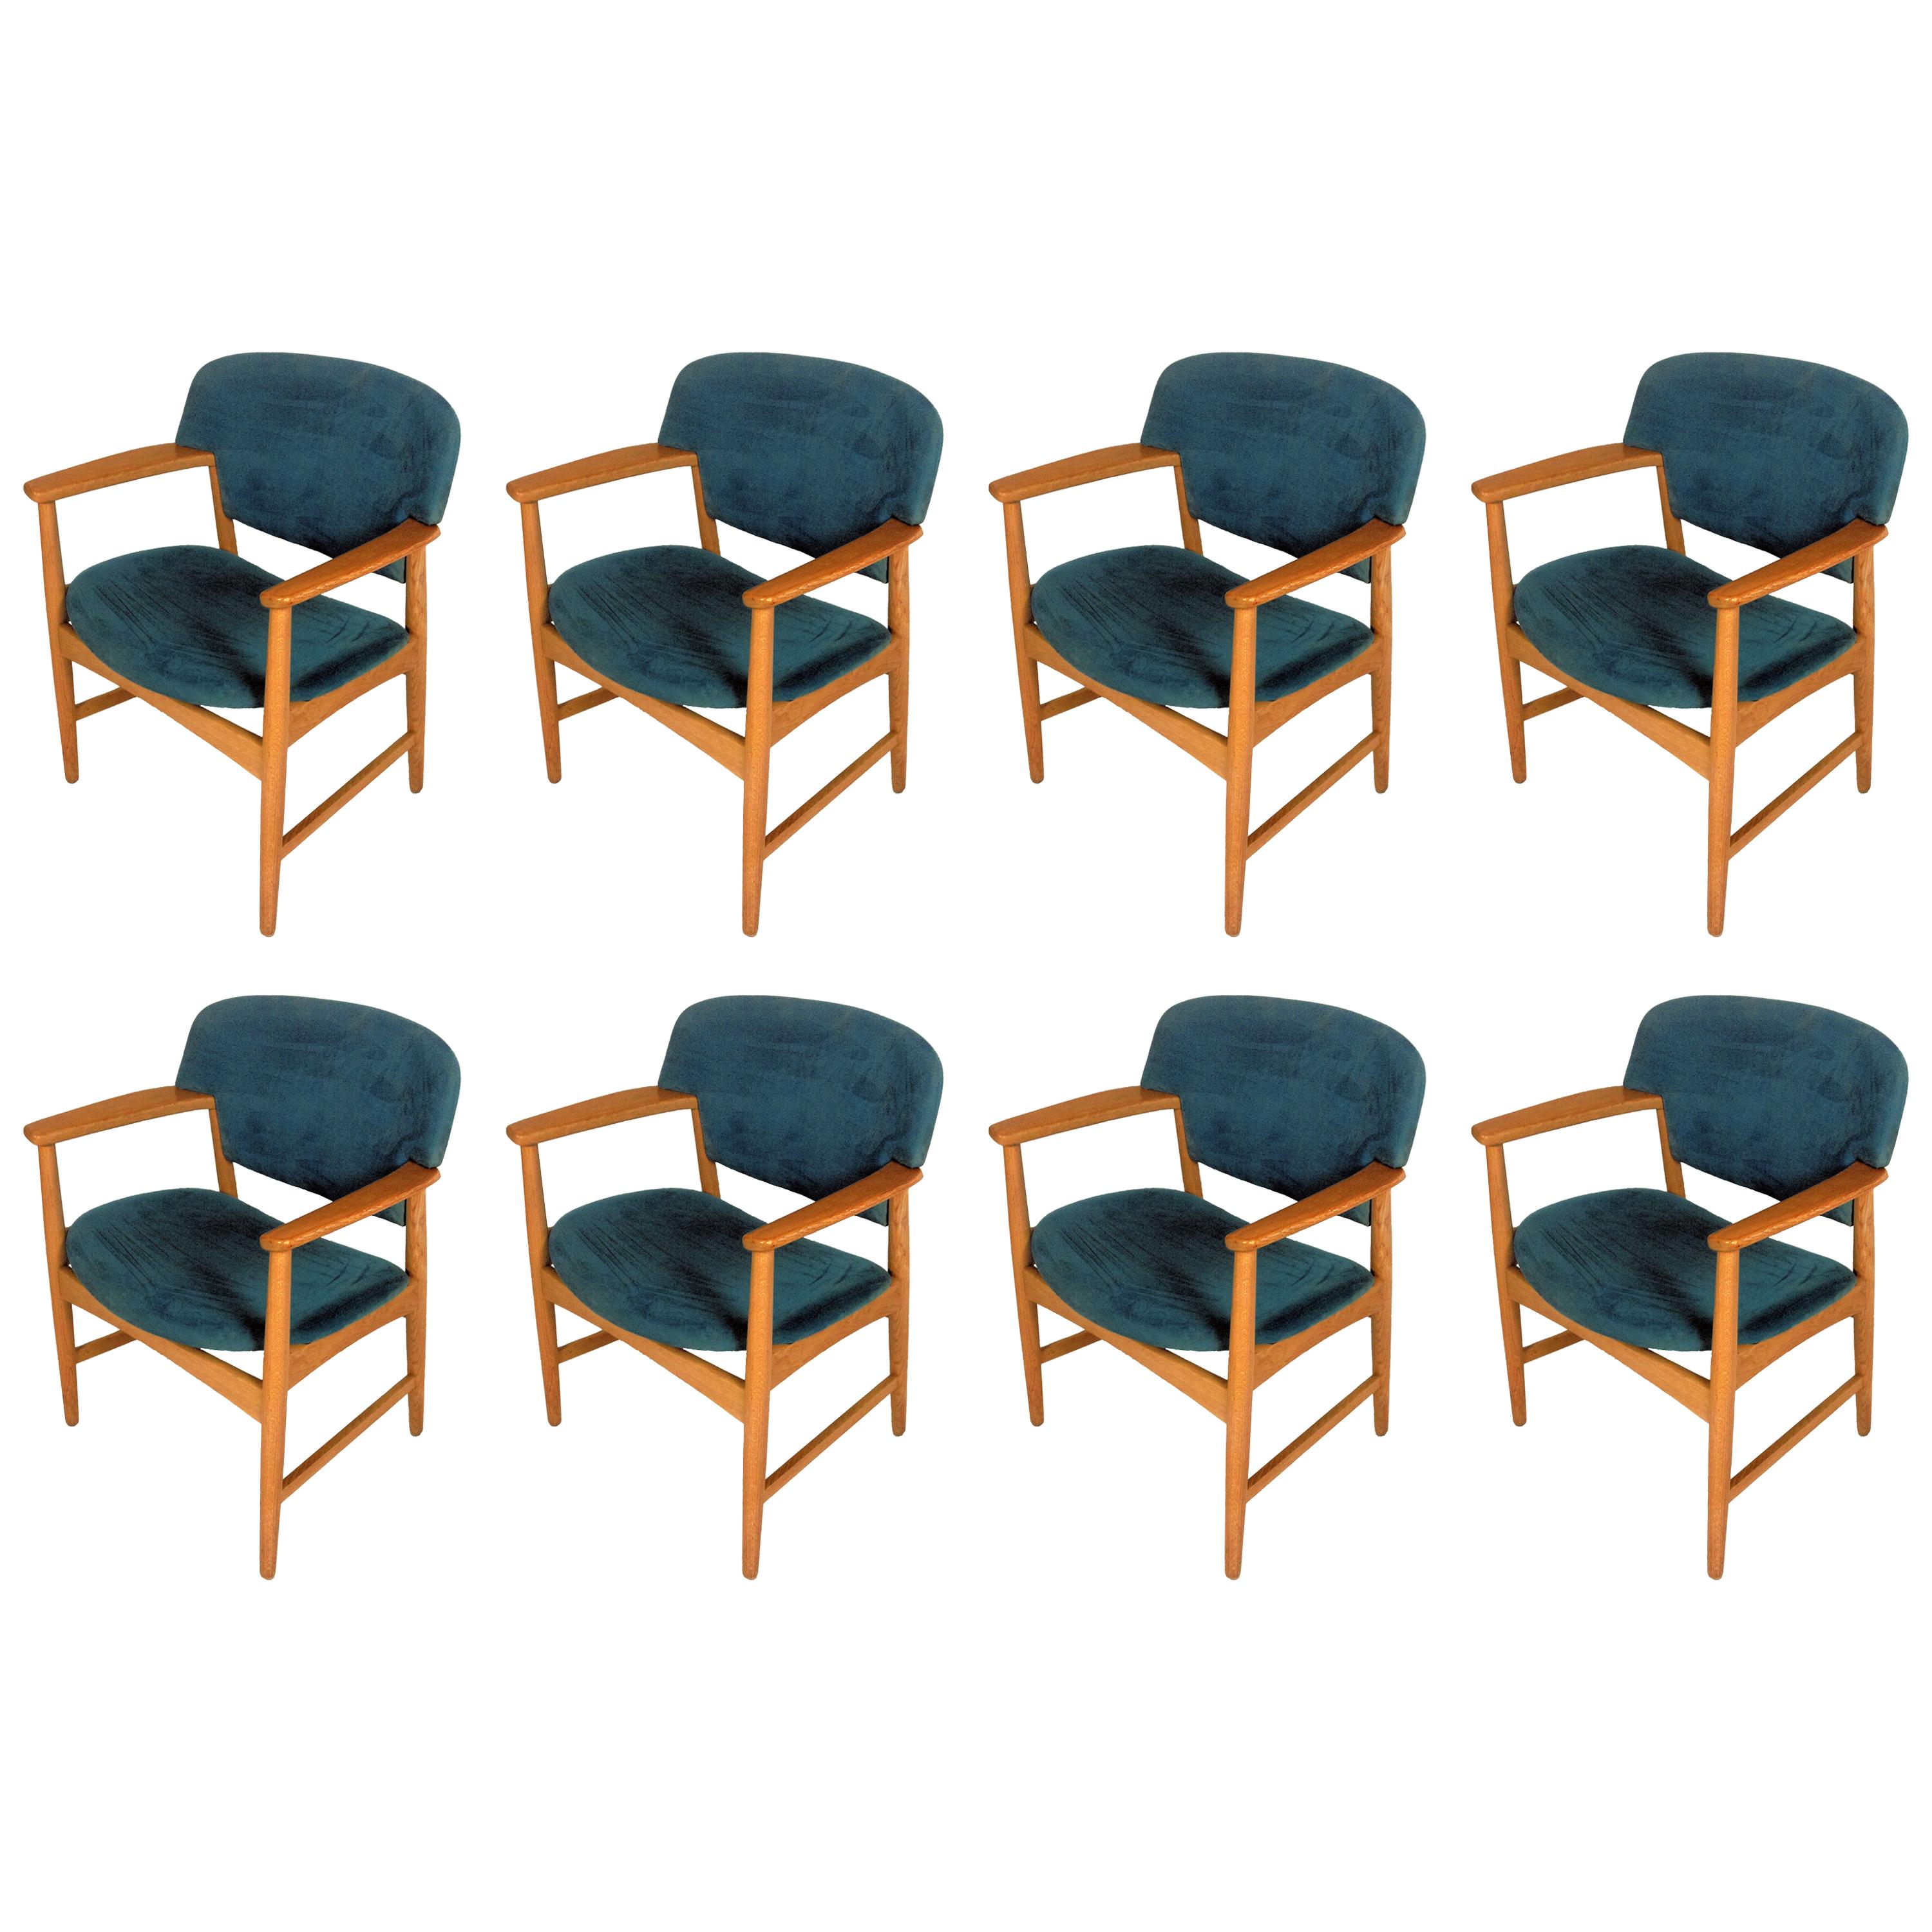 Huit fauteuils en chêne de Ejner Larsen et Axel Bender Madsen, Inc. à retapisser